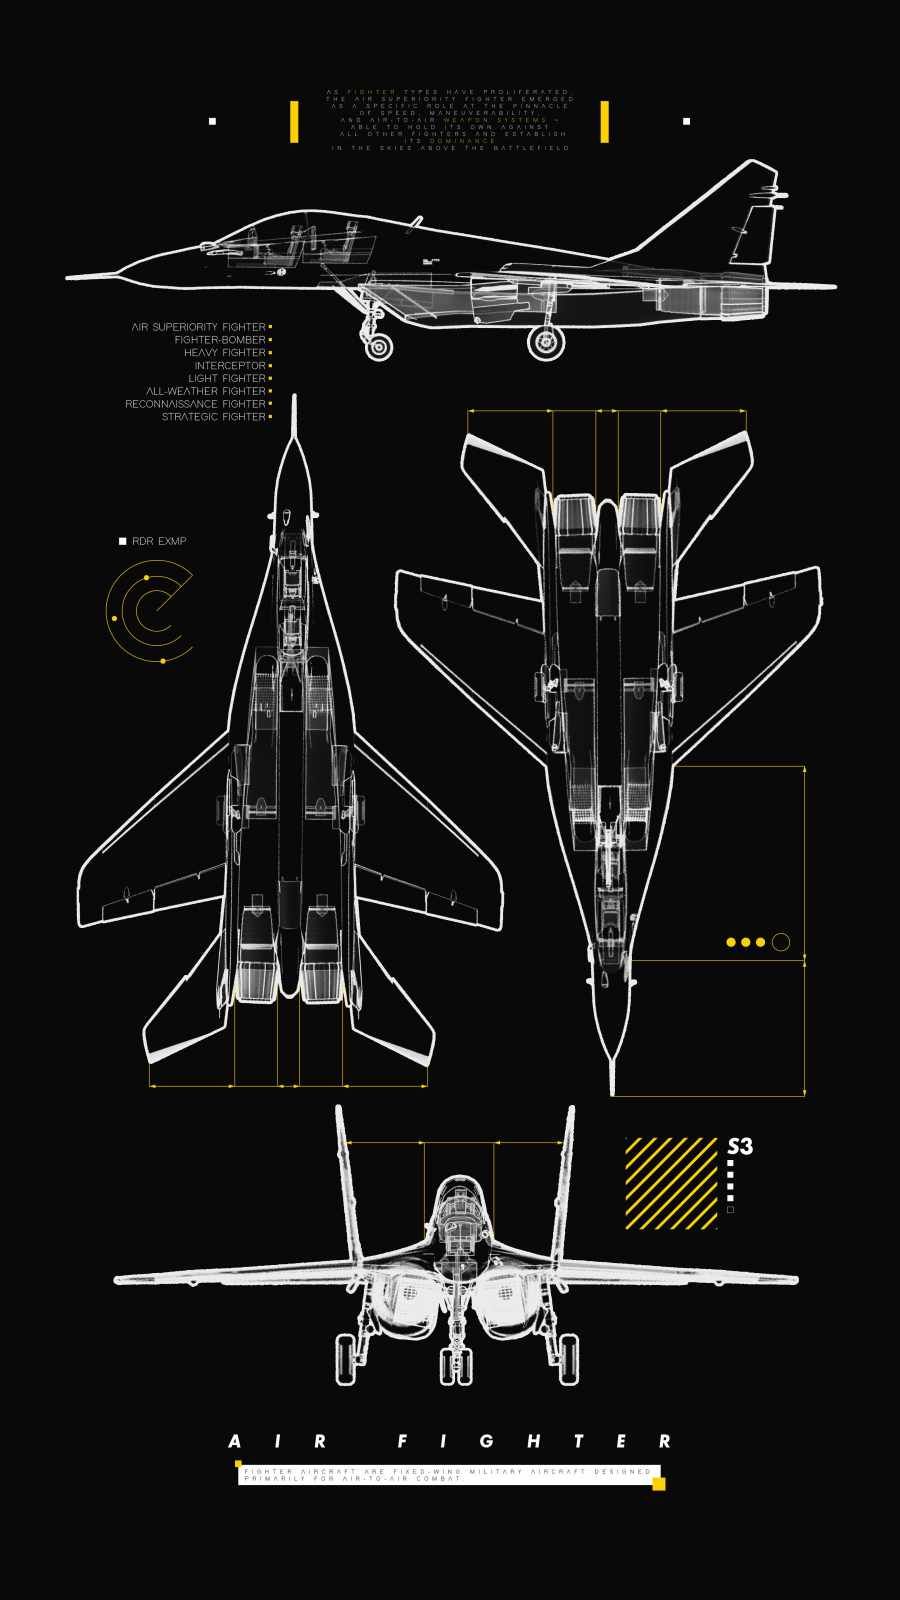 Fighter Jet Anatomy Wallpaper, iPhone Wallpaper. Air force wallpaper, Military wallpaper, iPhone wallpaper